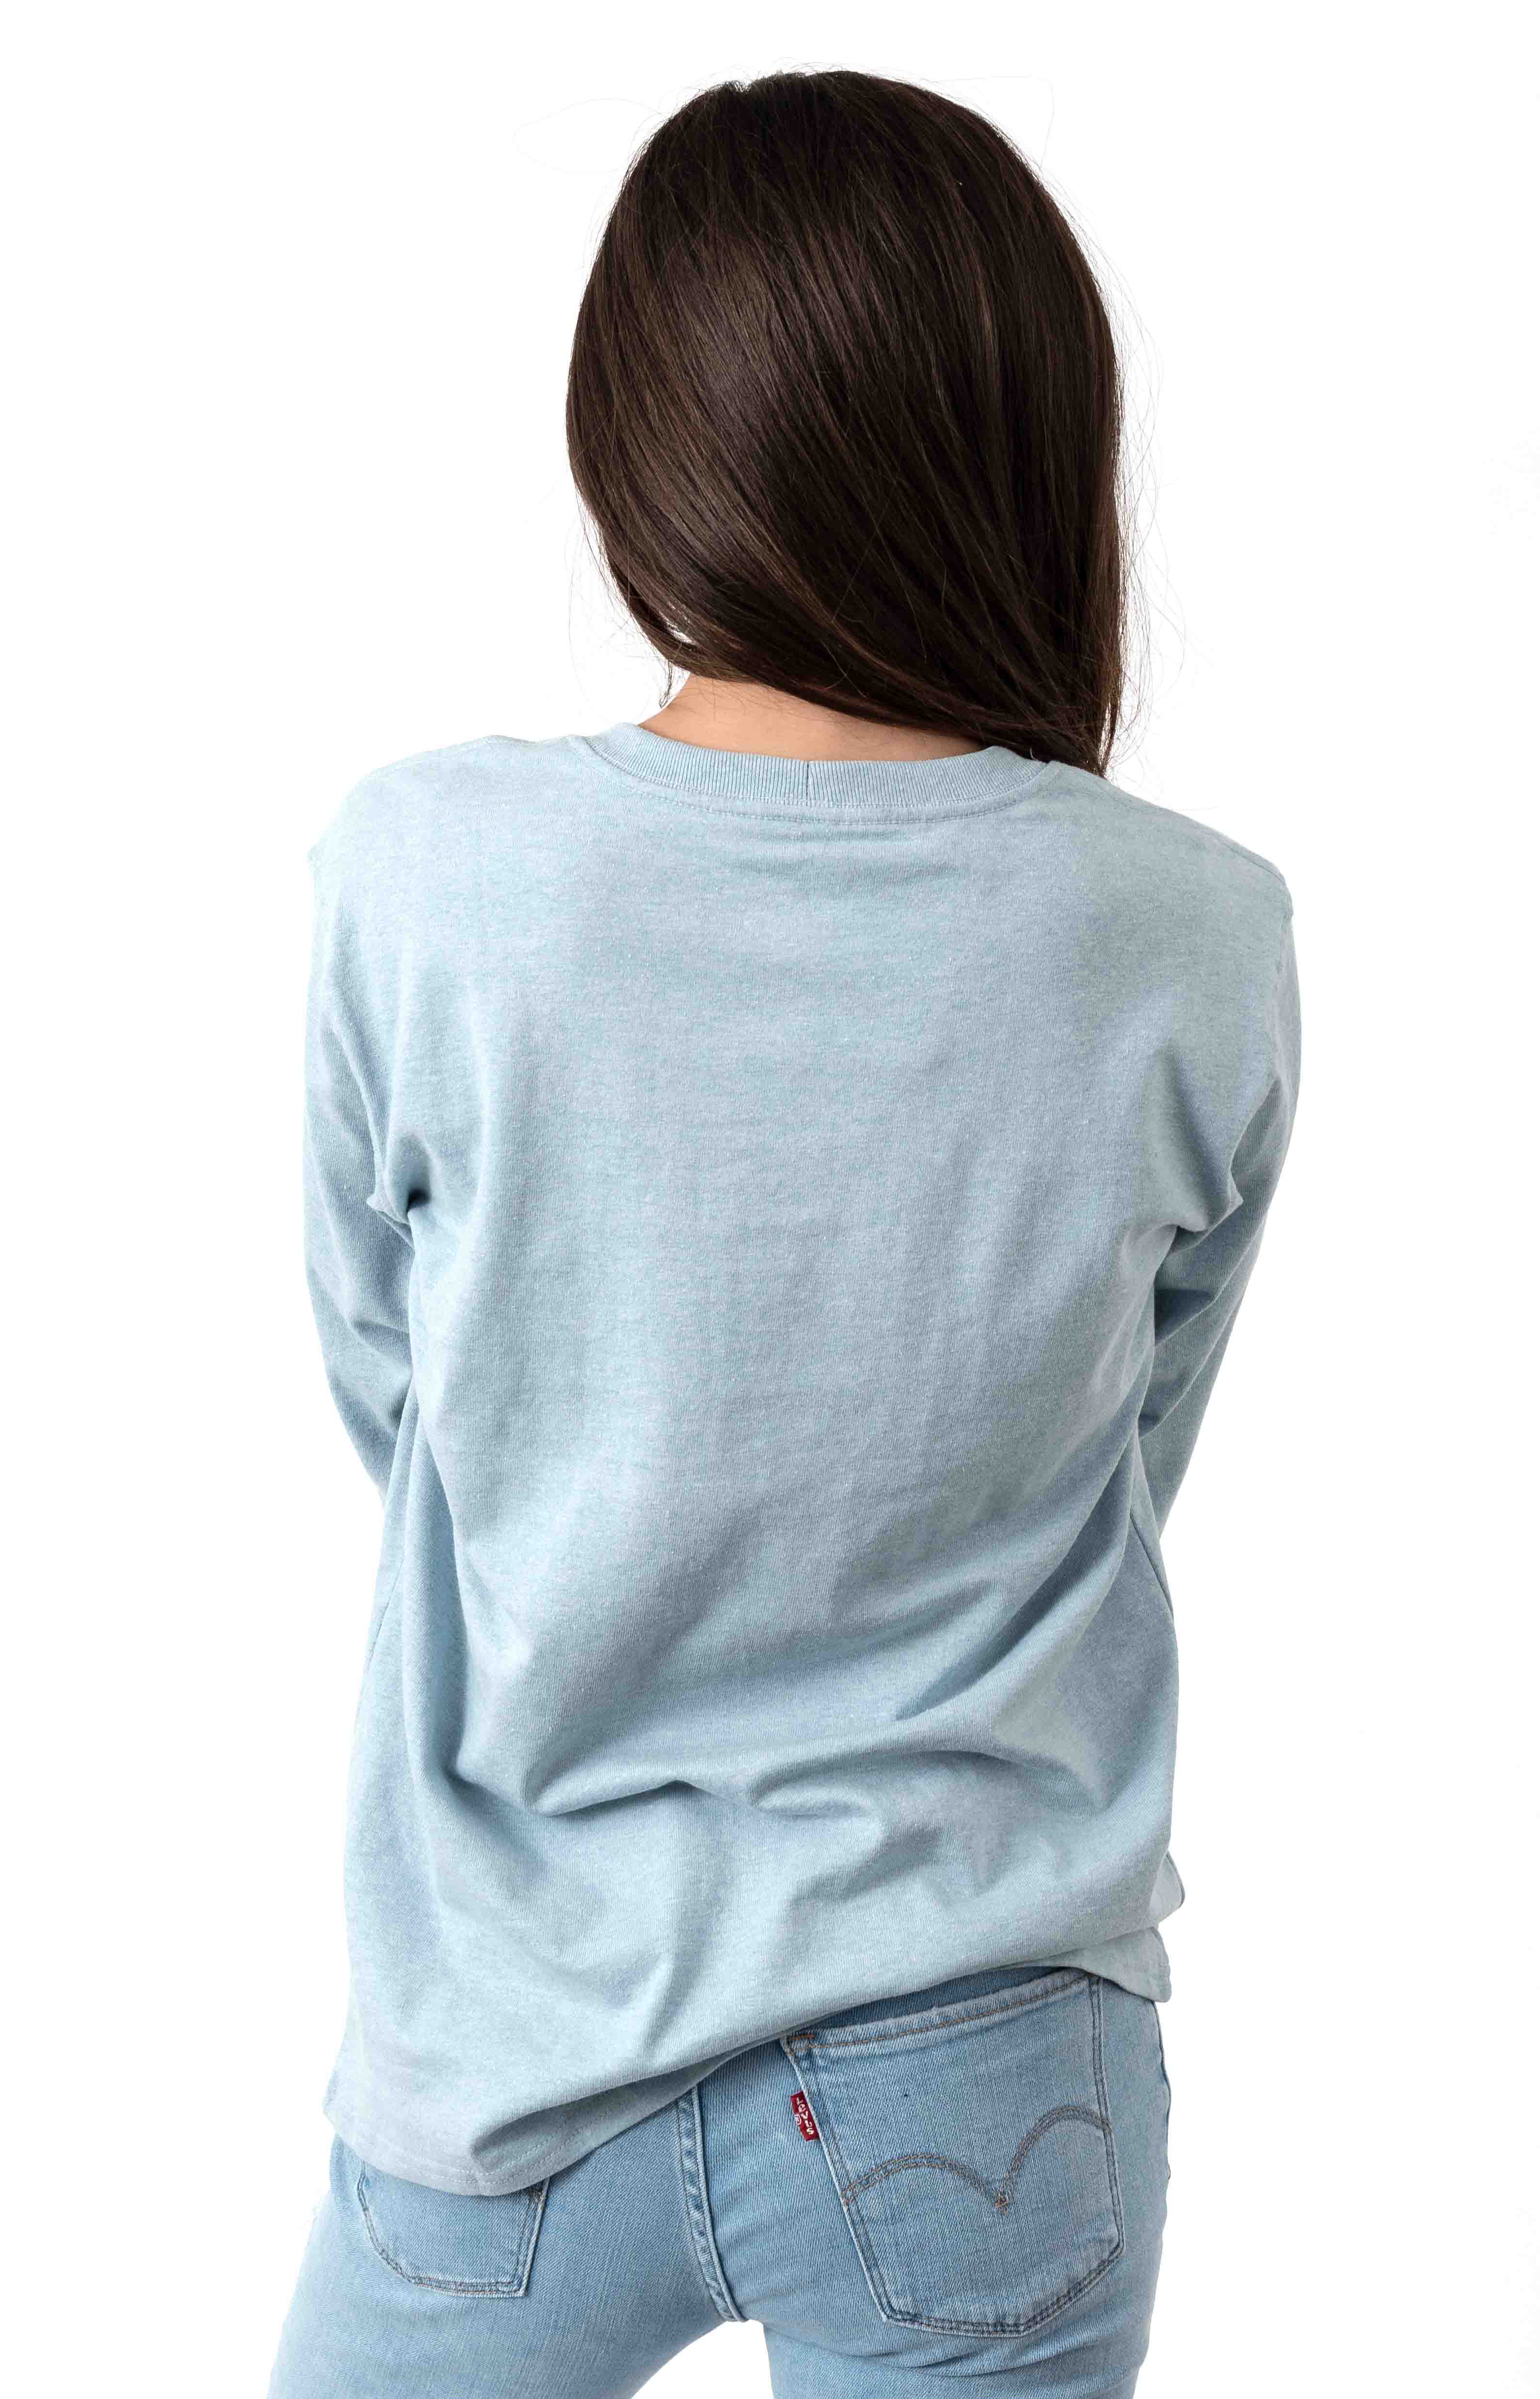 (103401) WK231 Workwear Sleeve Logo L/S Shirt - Soft Blue Heather